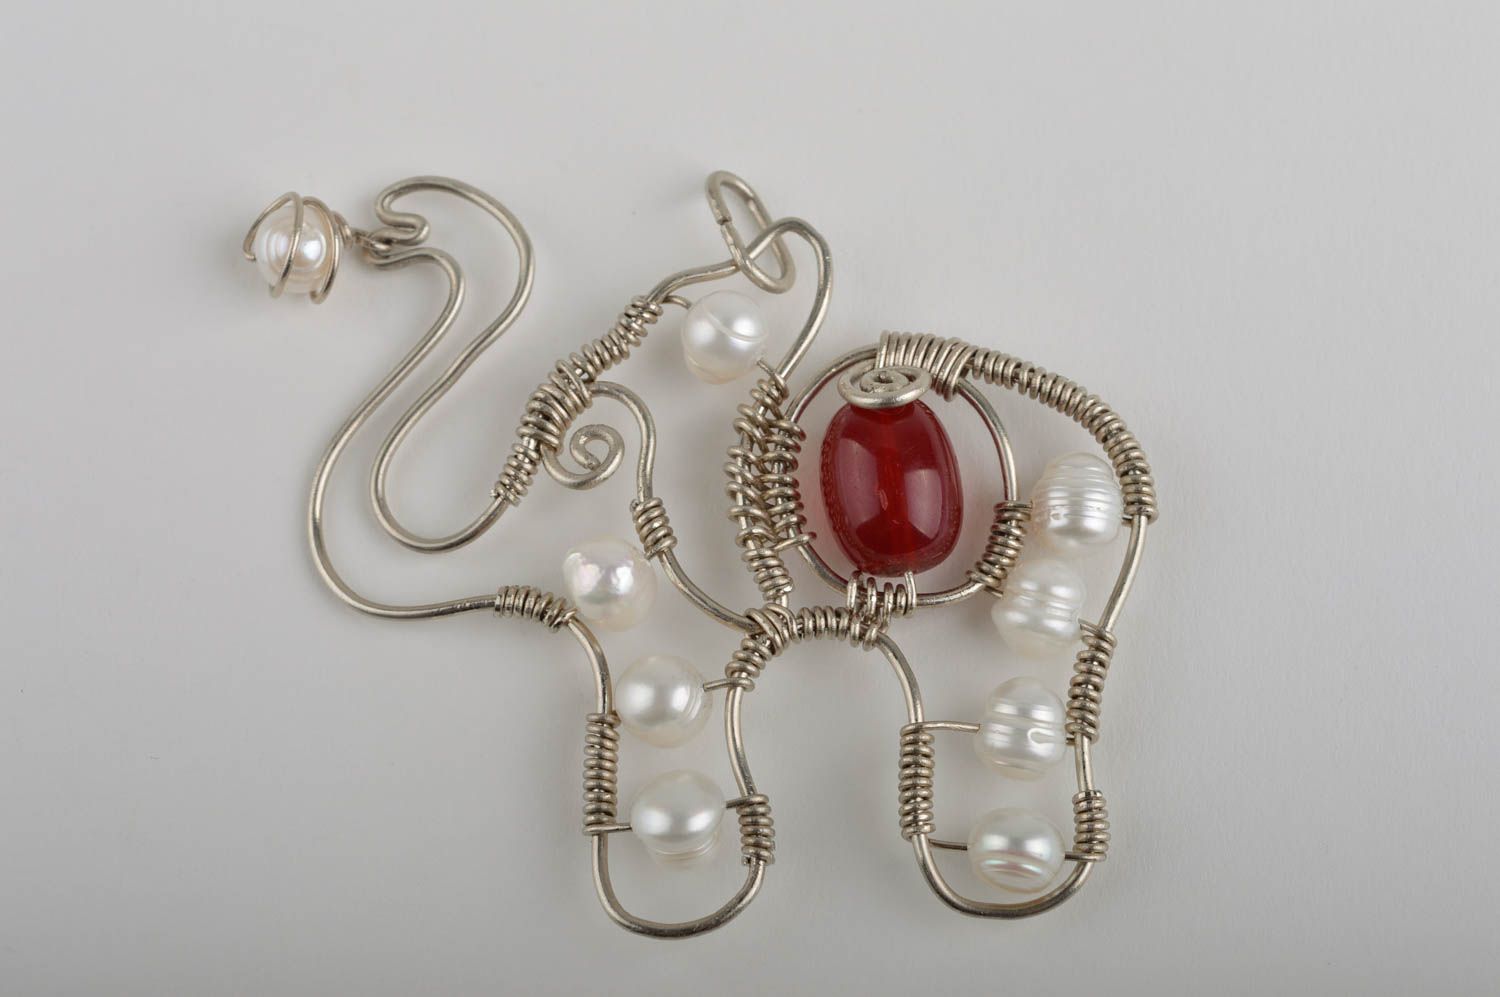 Handmade metal jewelry pendant necklace charm necklace designer accessories photo 2